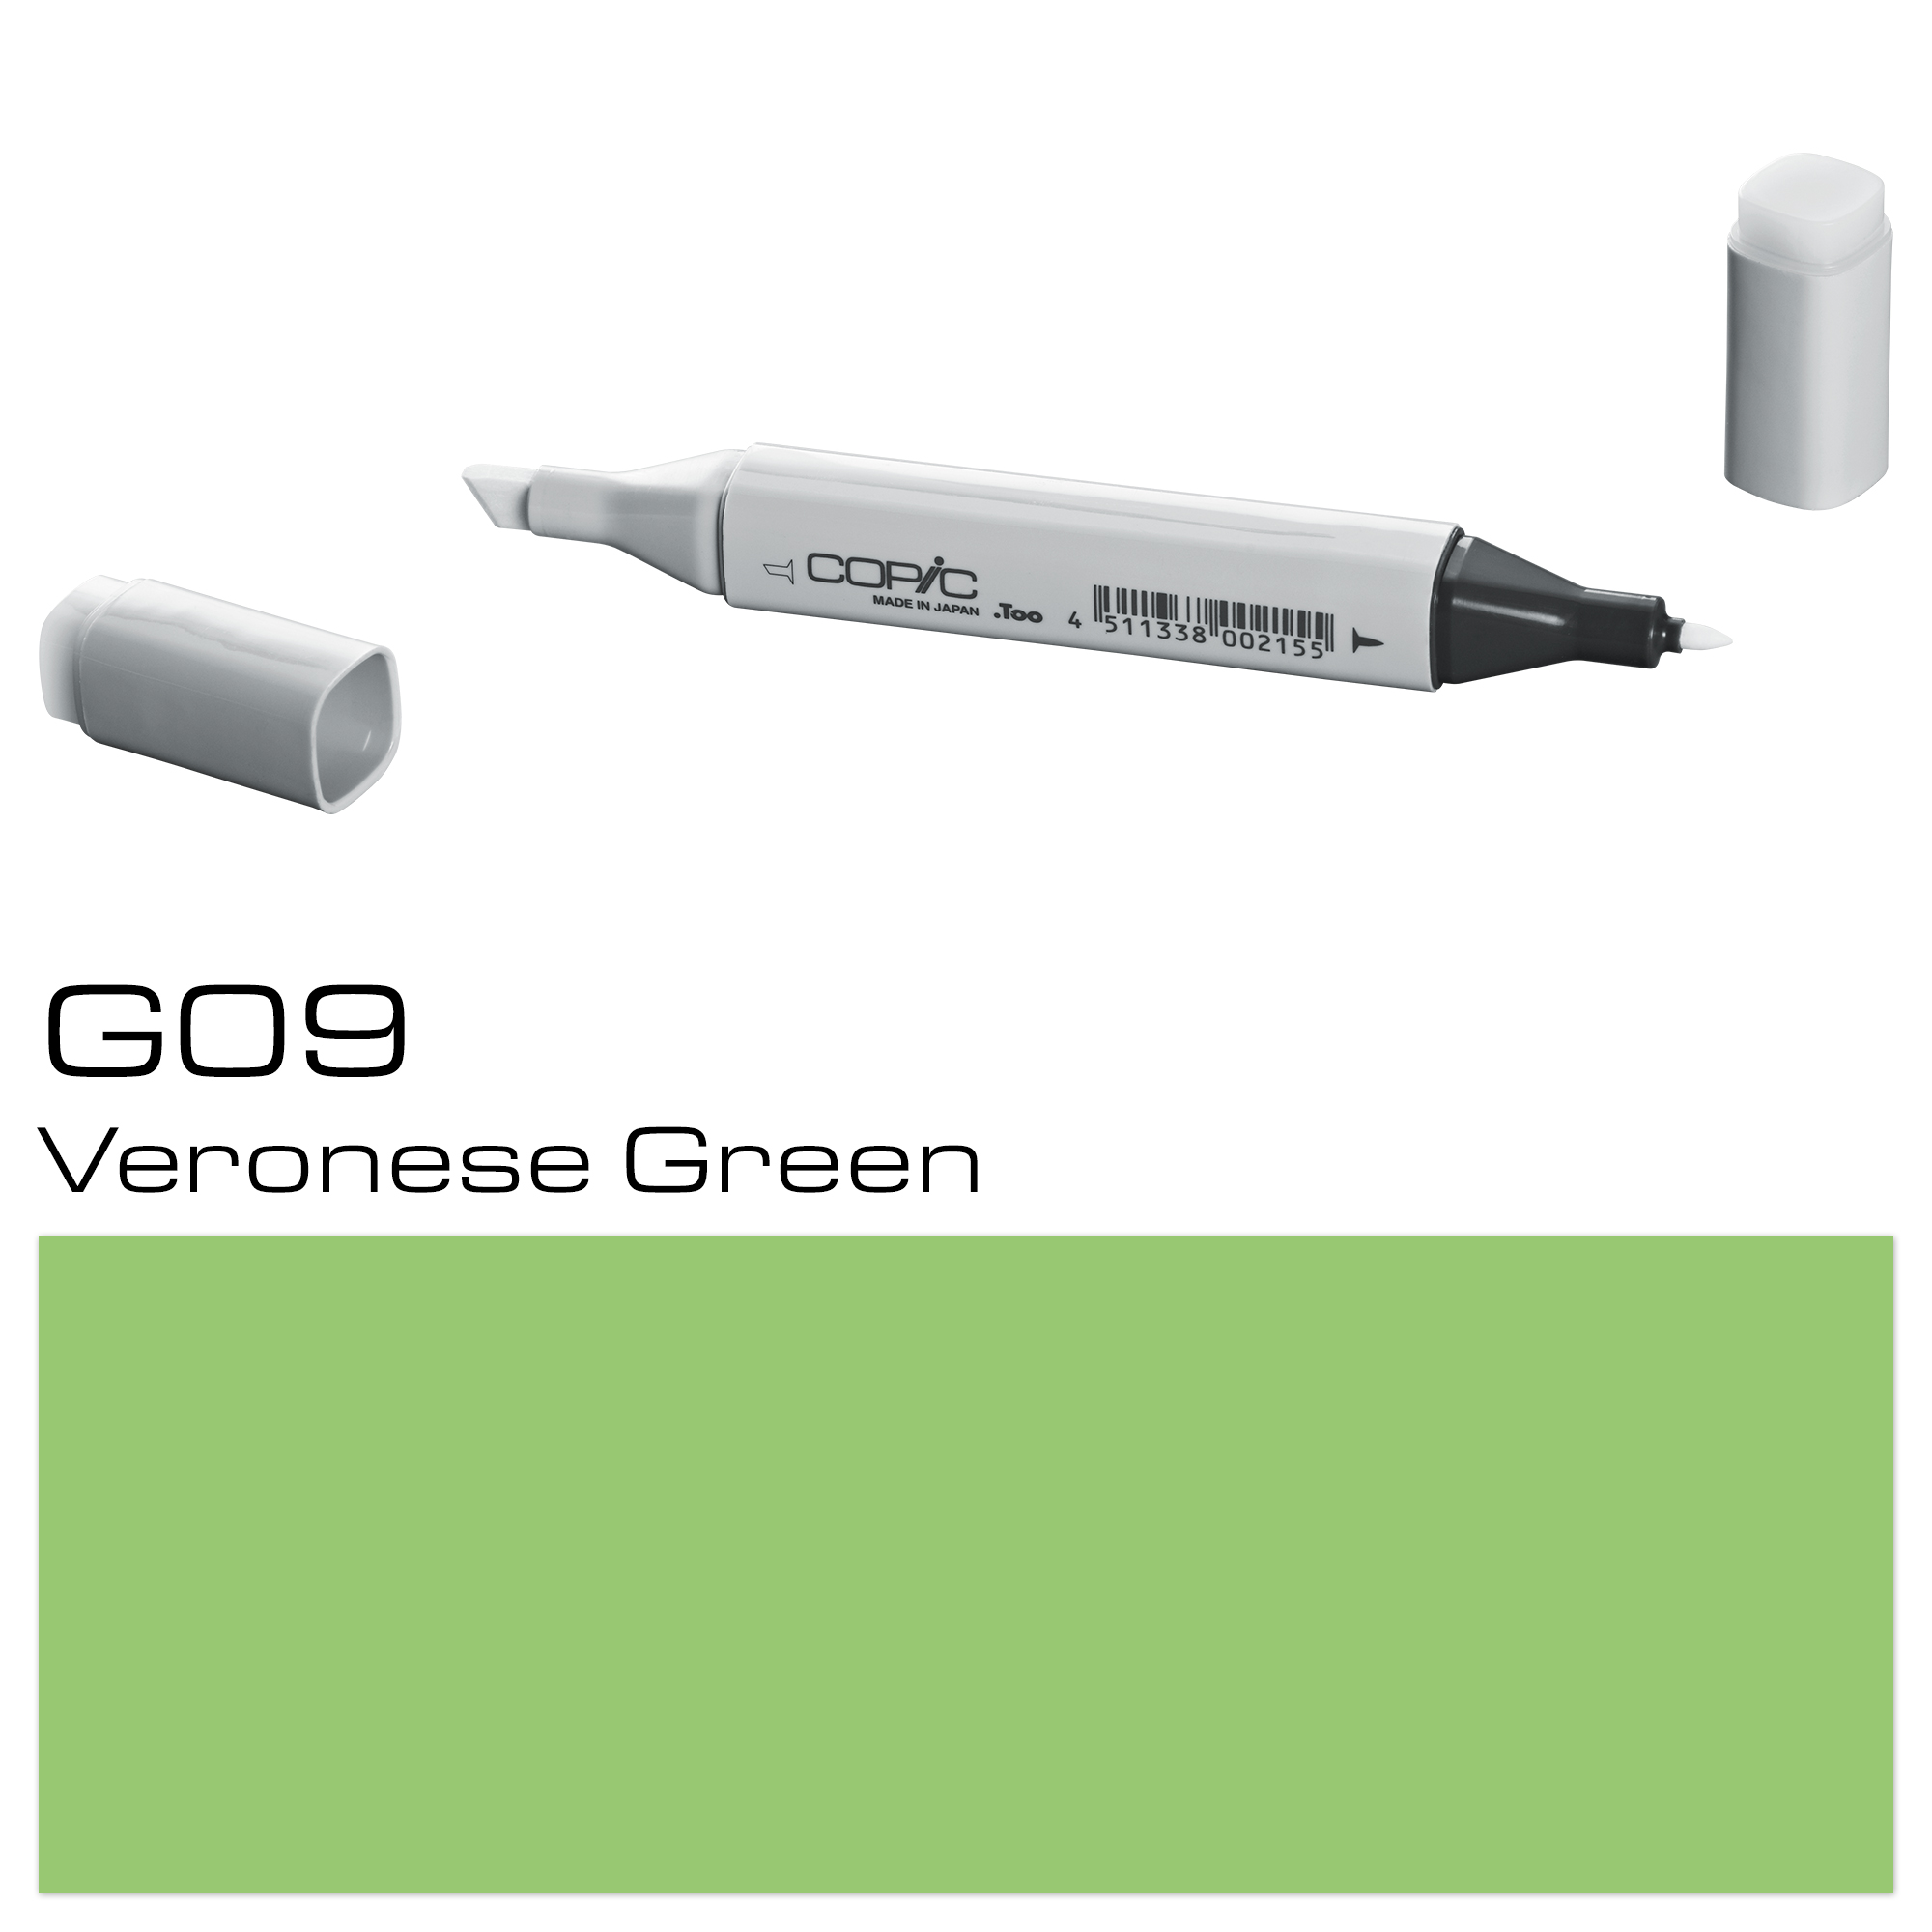 COPIC MARKER VERONESE GREEN G09